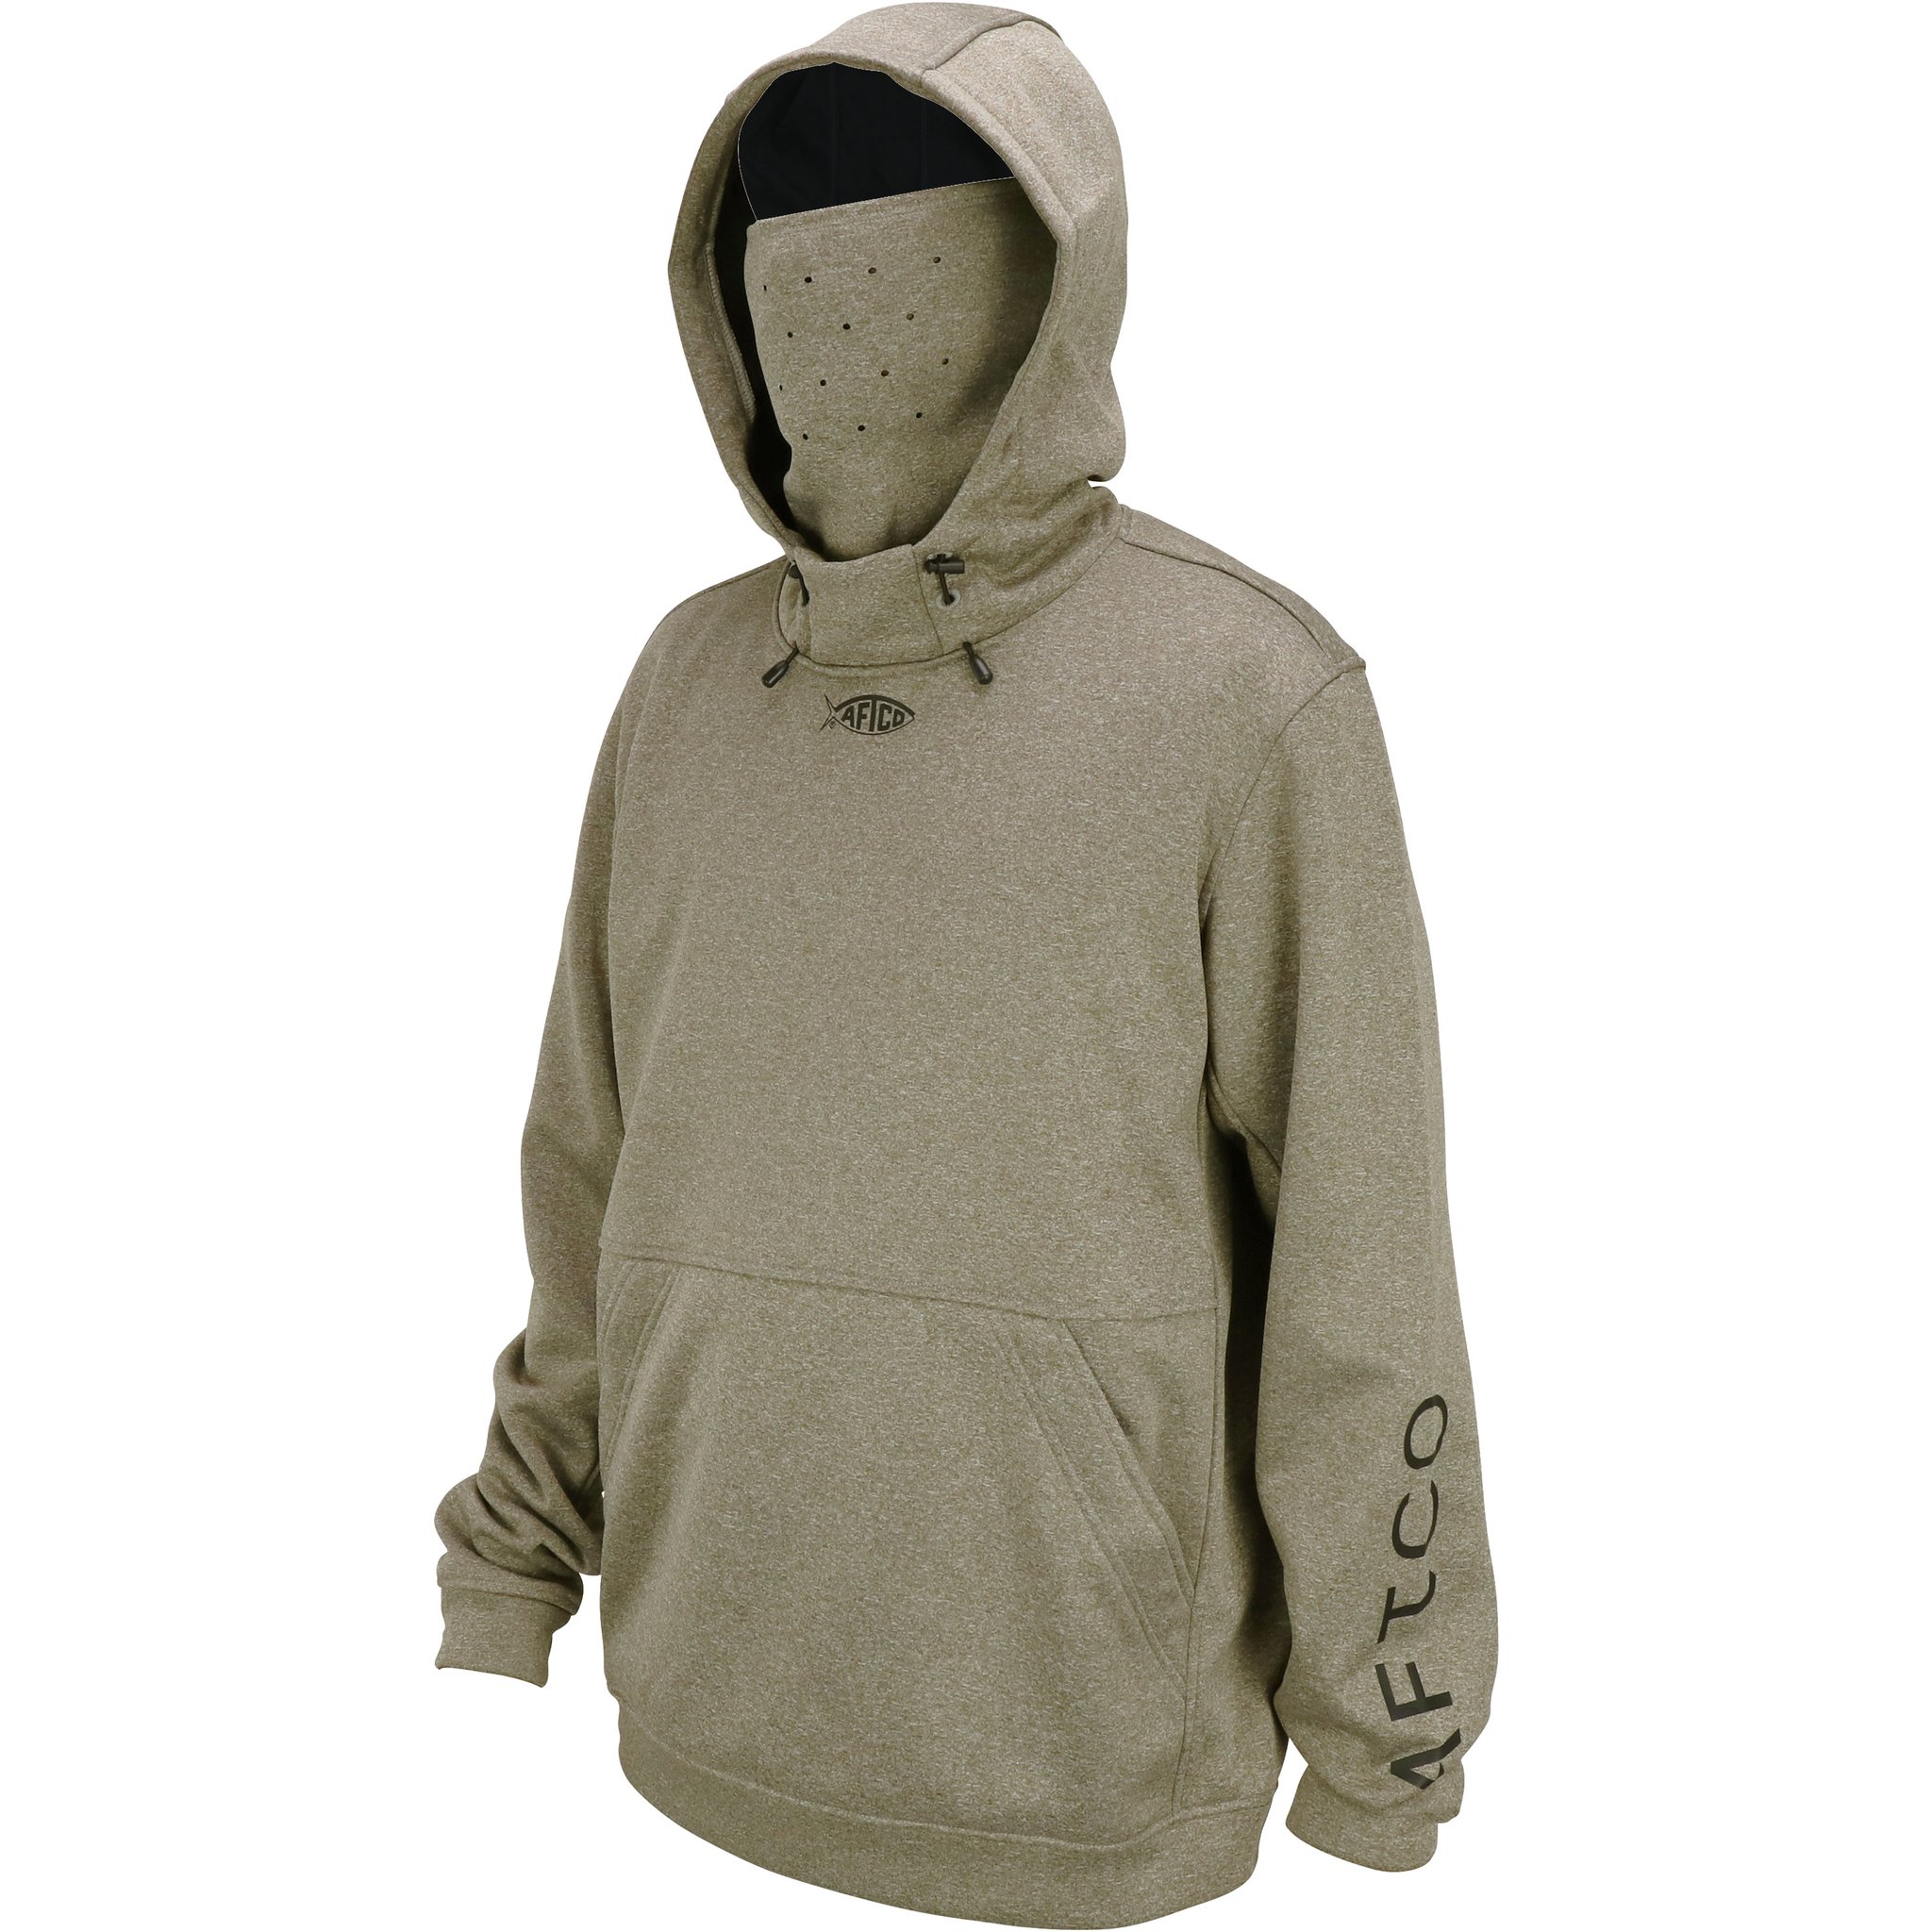 AFTCO Reaper Technical Sweatshirt - Charcoal Heather - S